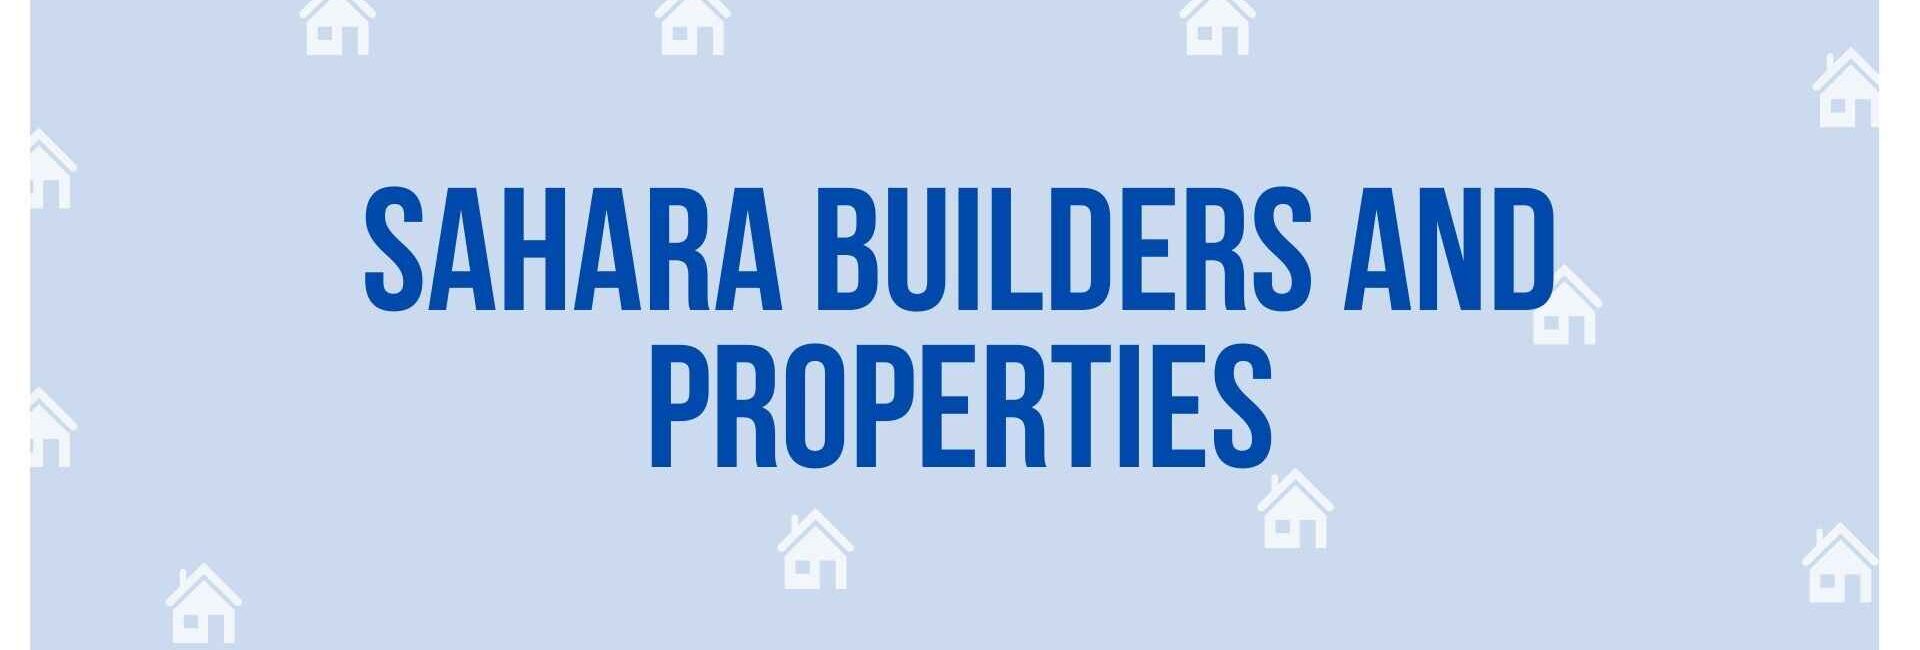 Sahara Builders and Properties - Property Dealer in Noida